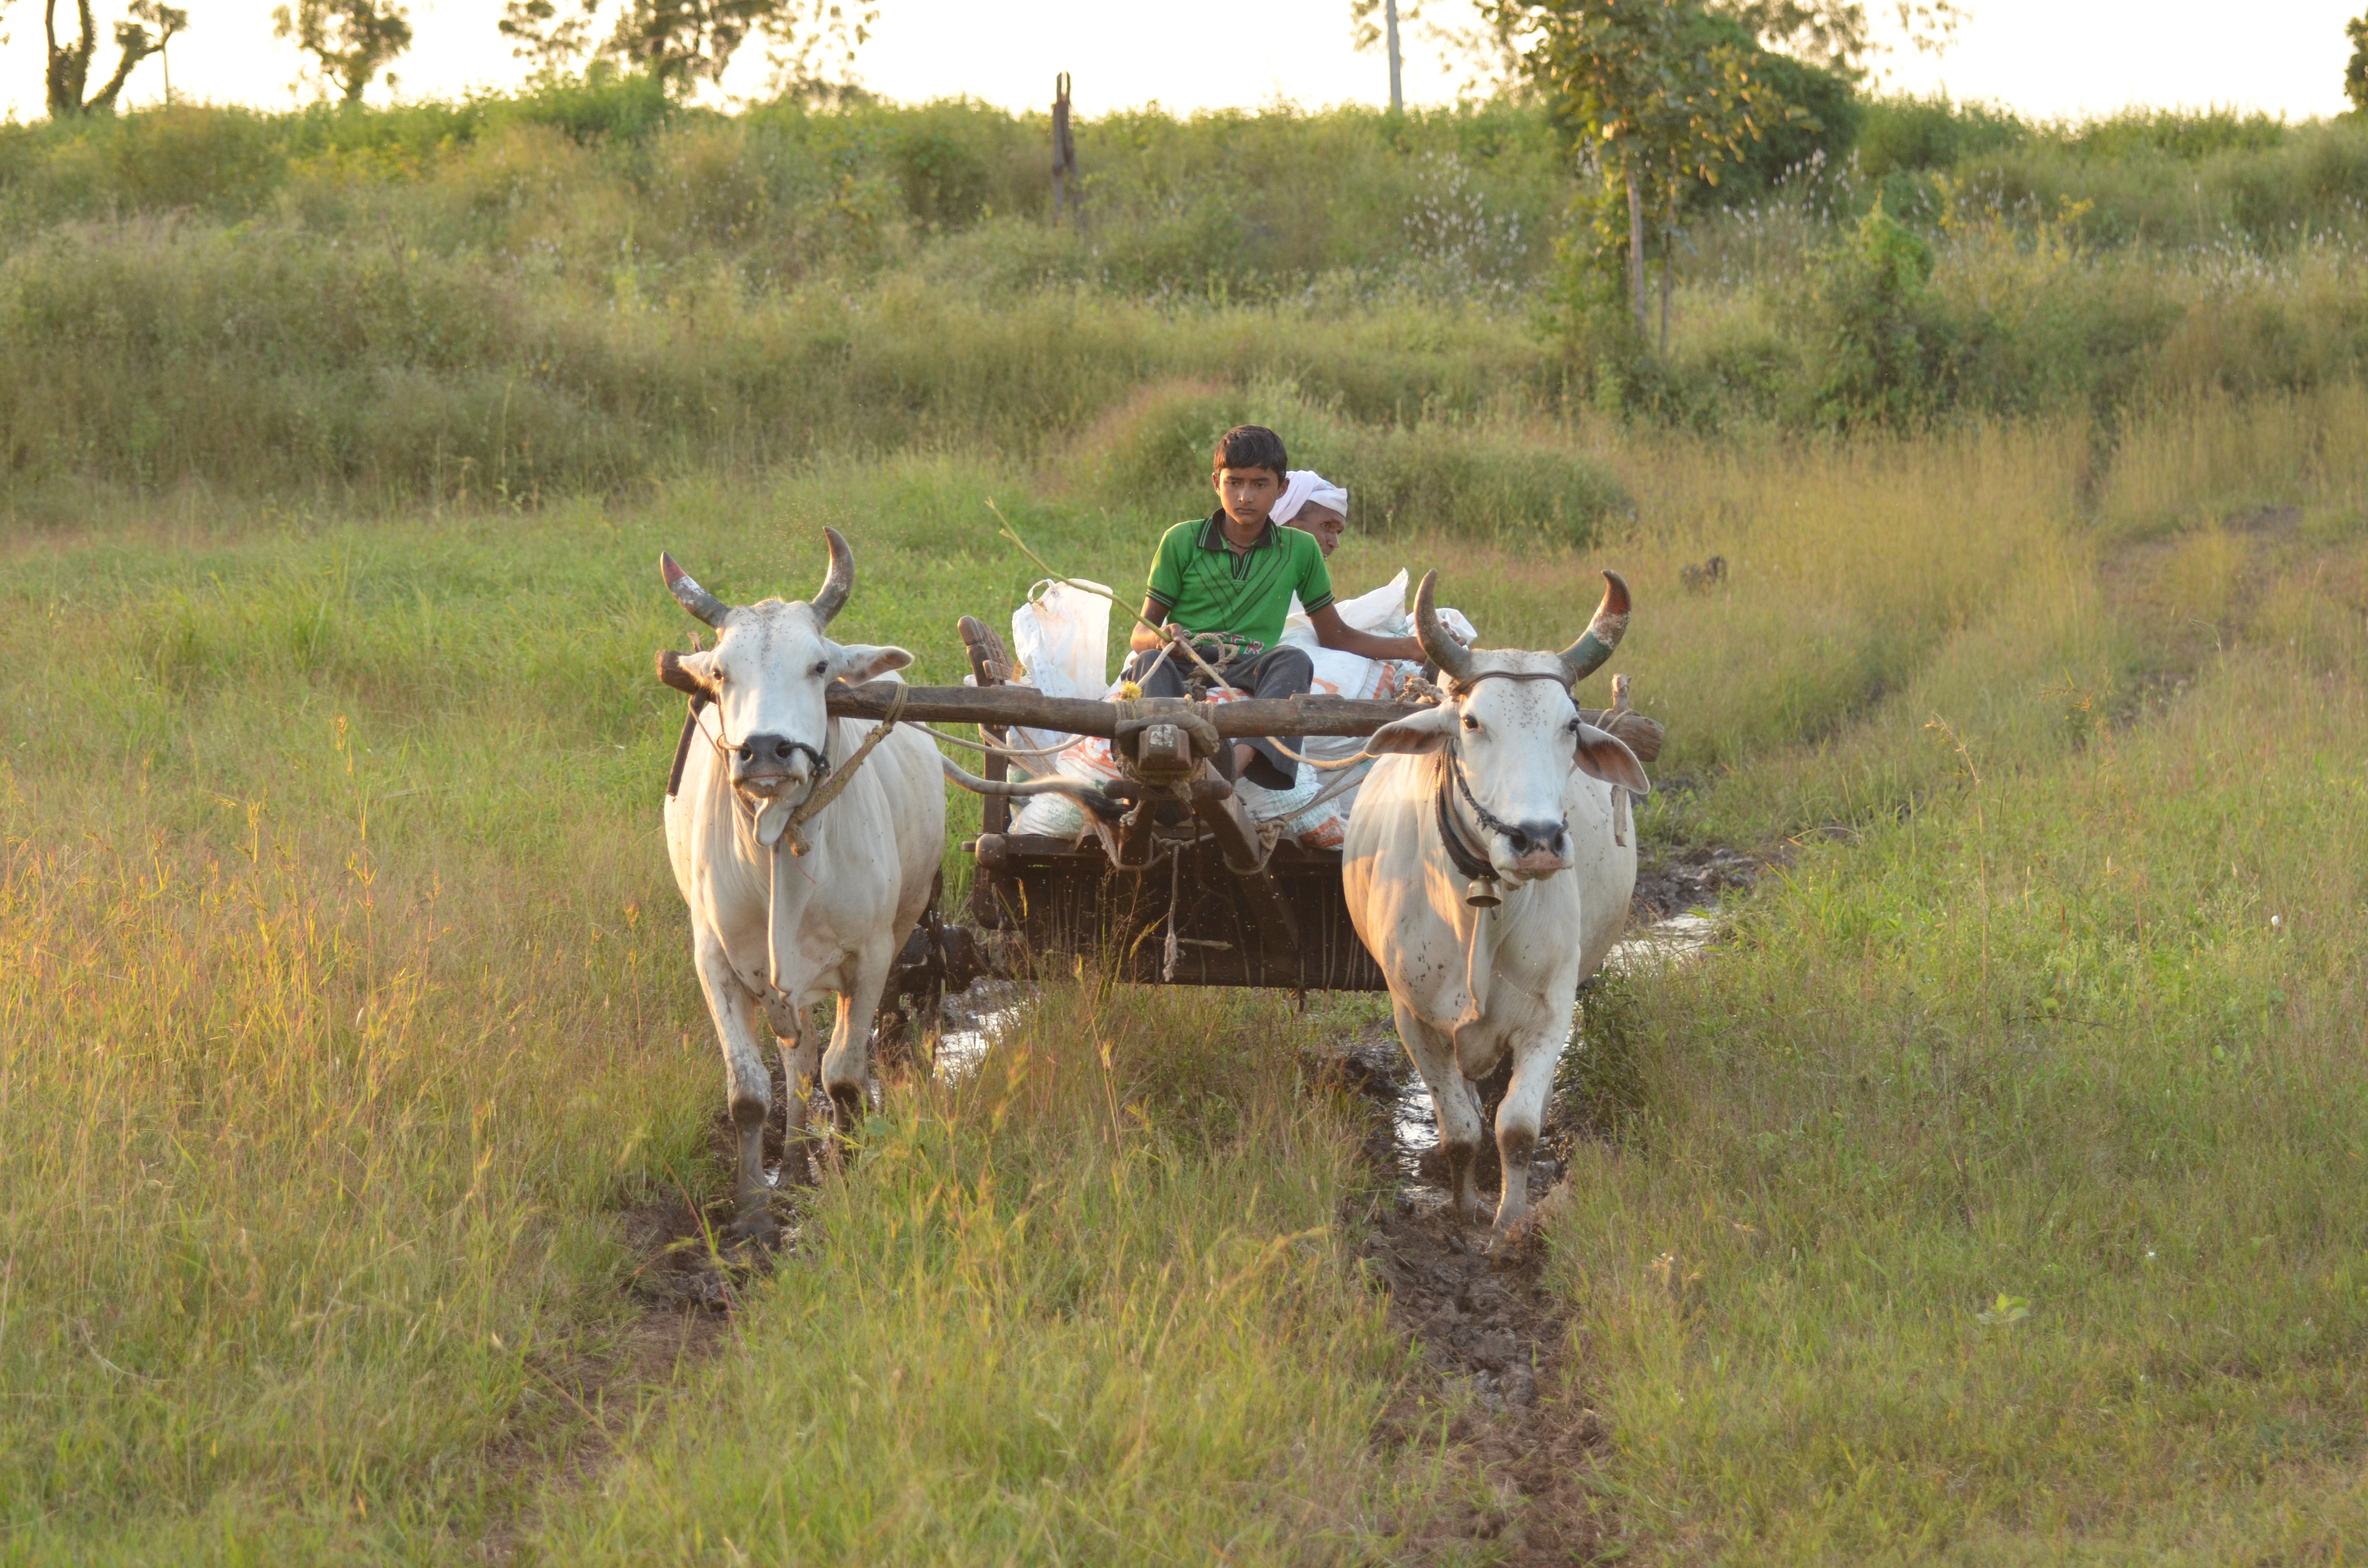 Indian Bullock cart